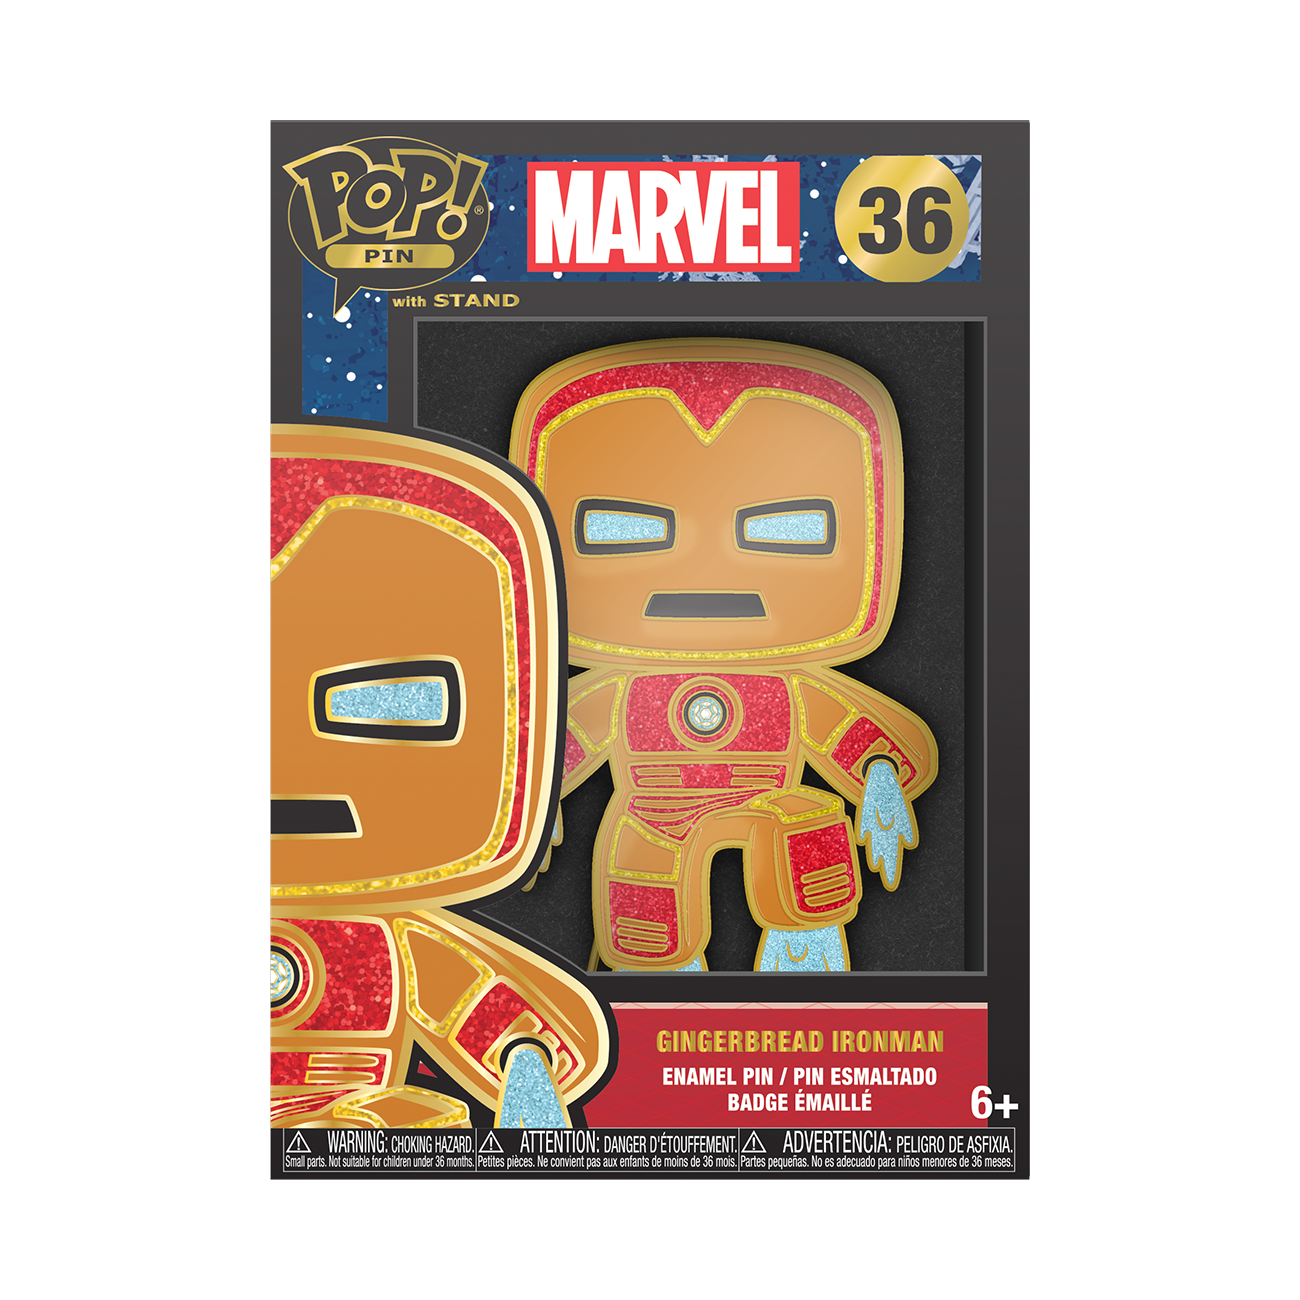 FUNKO POP! PIN Gingerbread Ironman Pop! Pin - Marvel